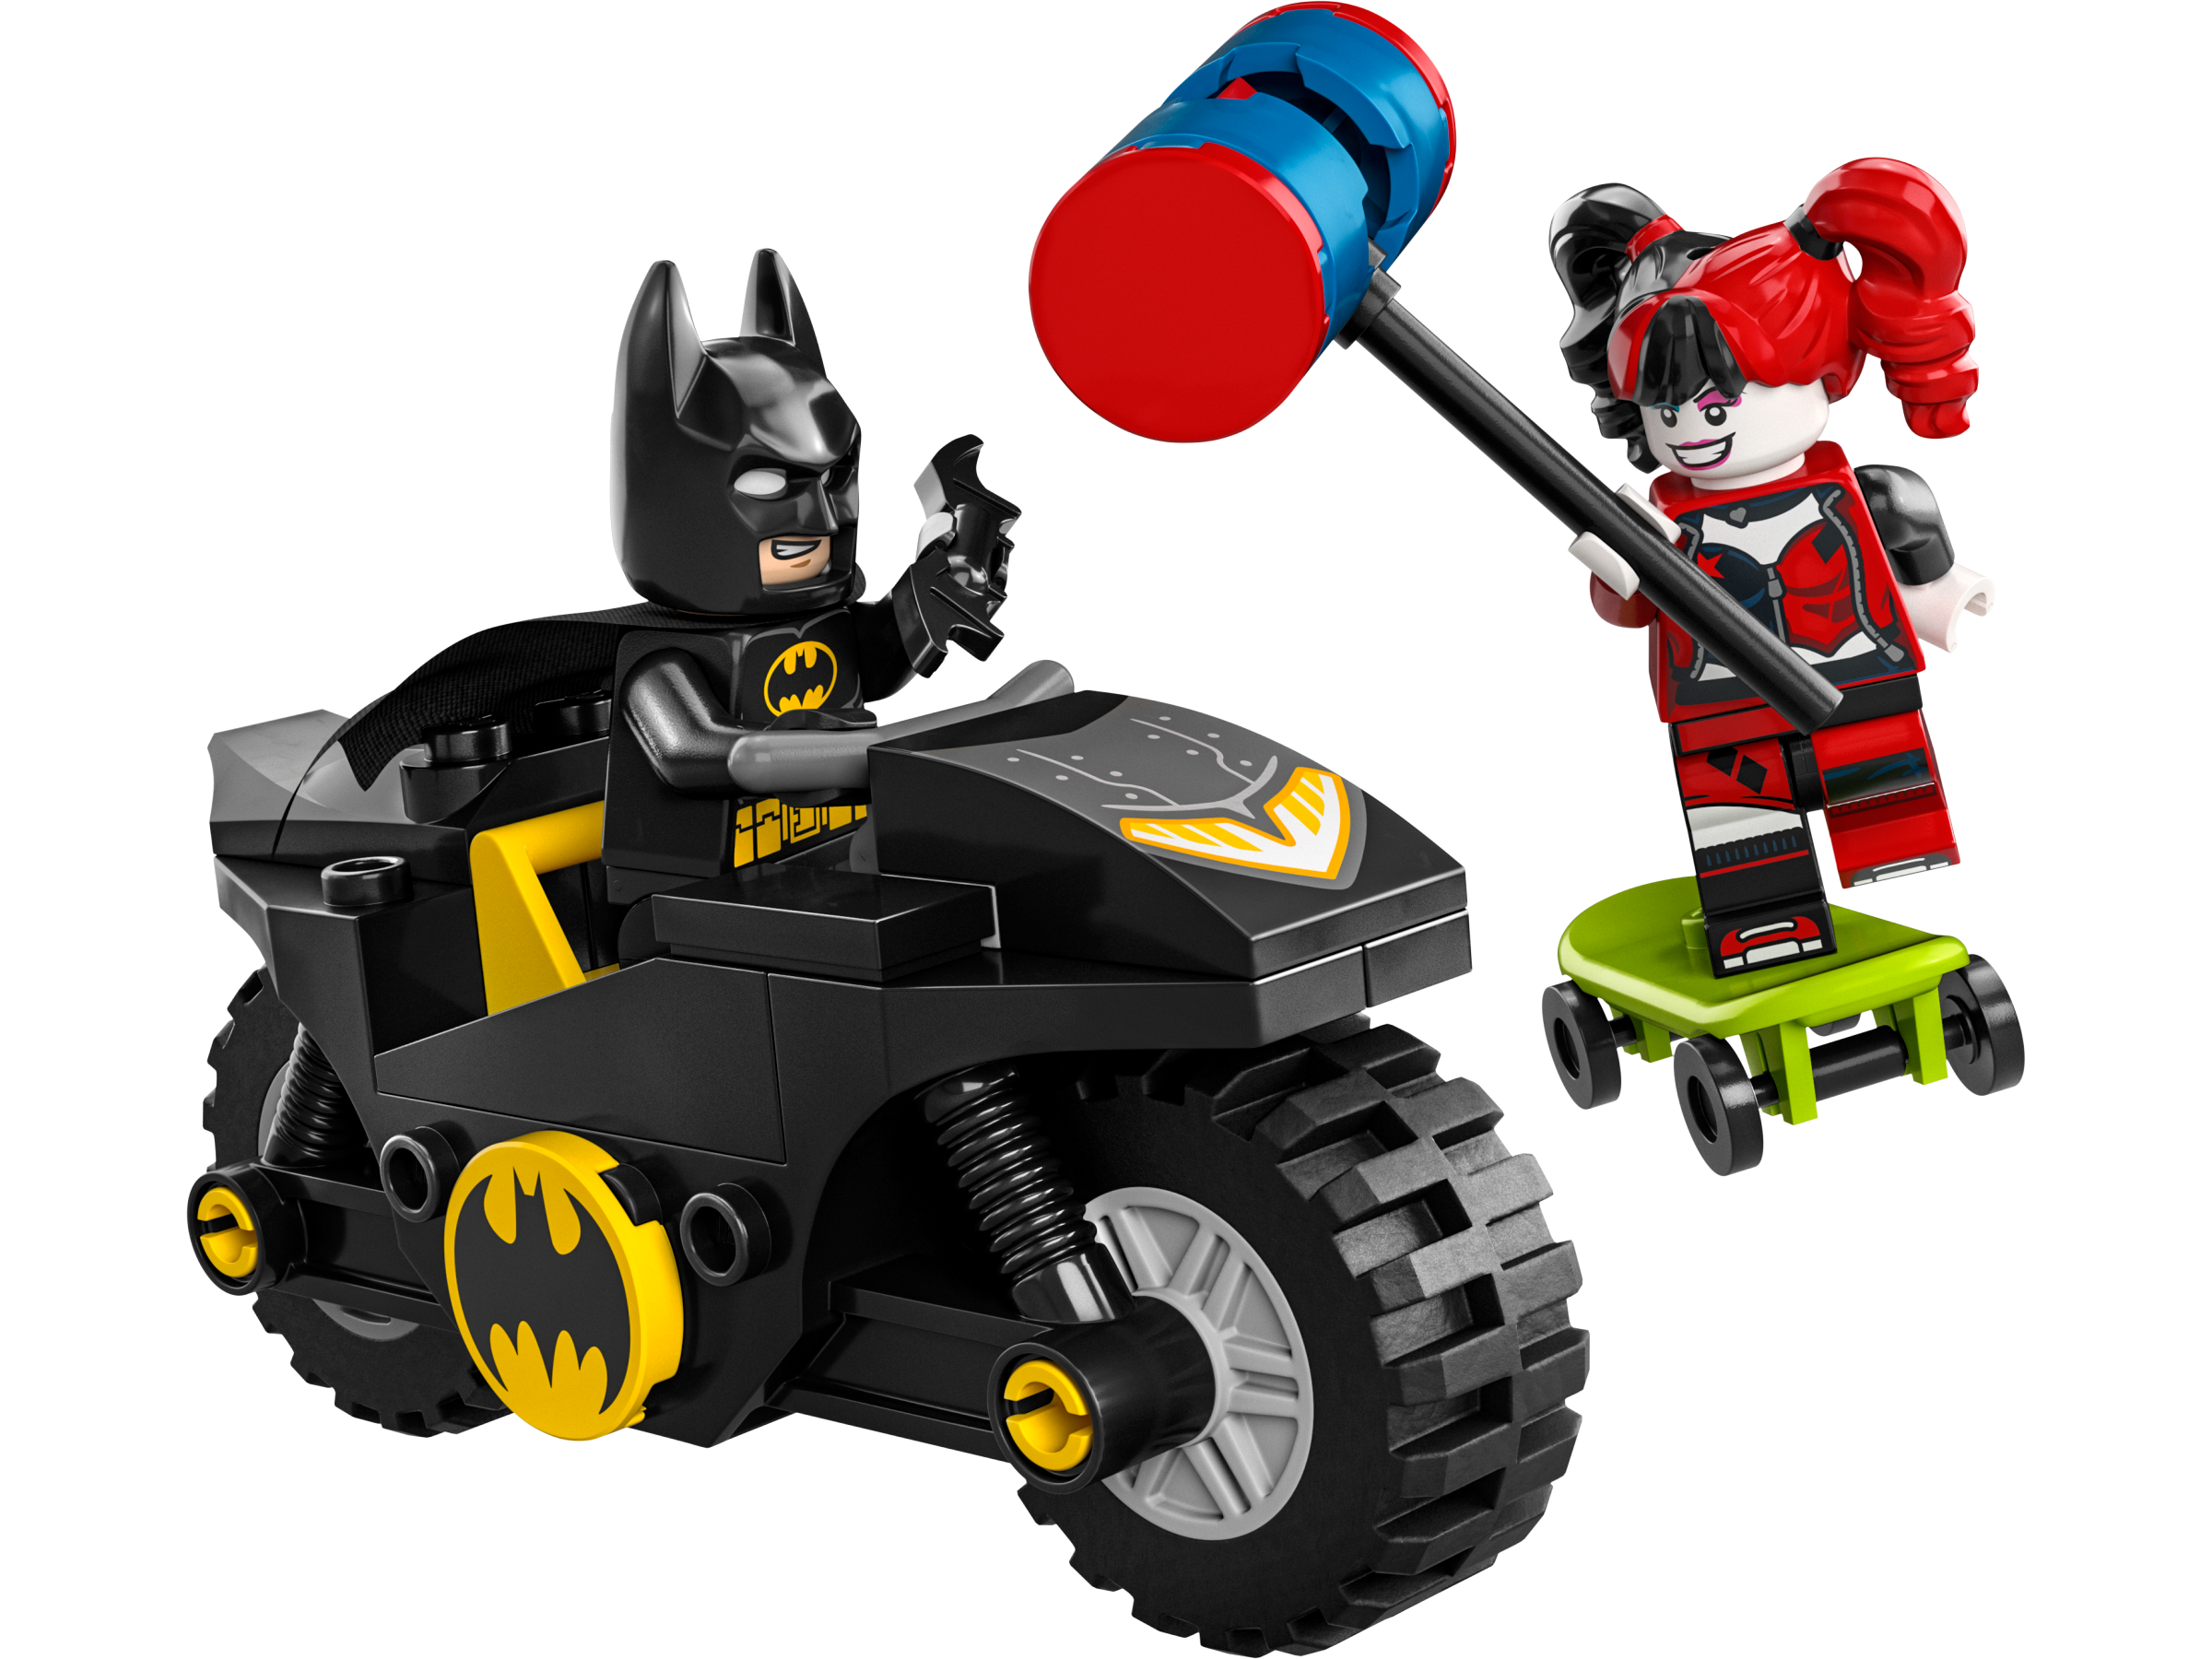 Harley Quinn™ 76220 Batman™ | Buy at the Official LEGO® Shop US